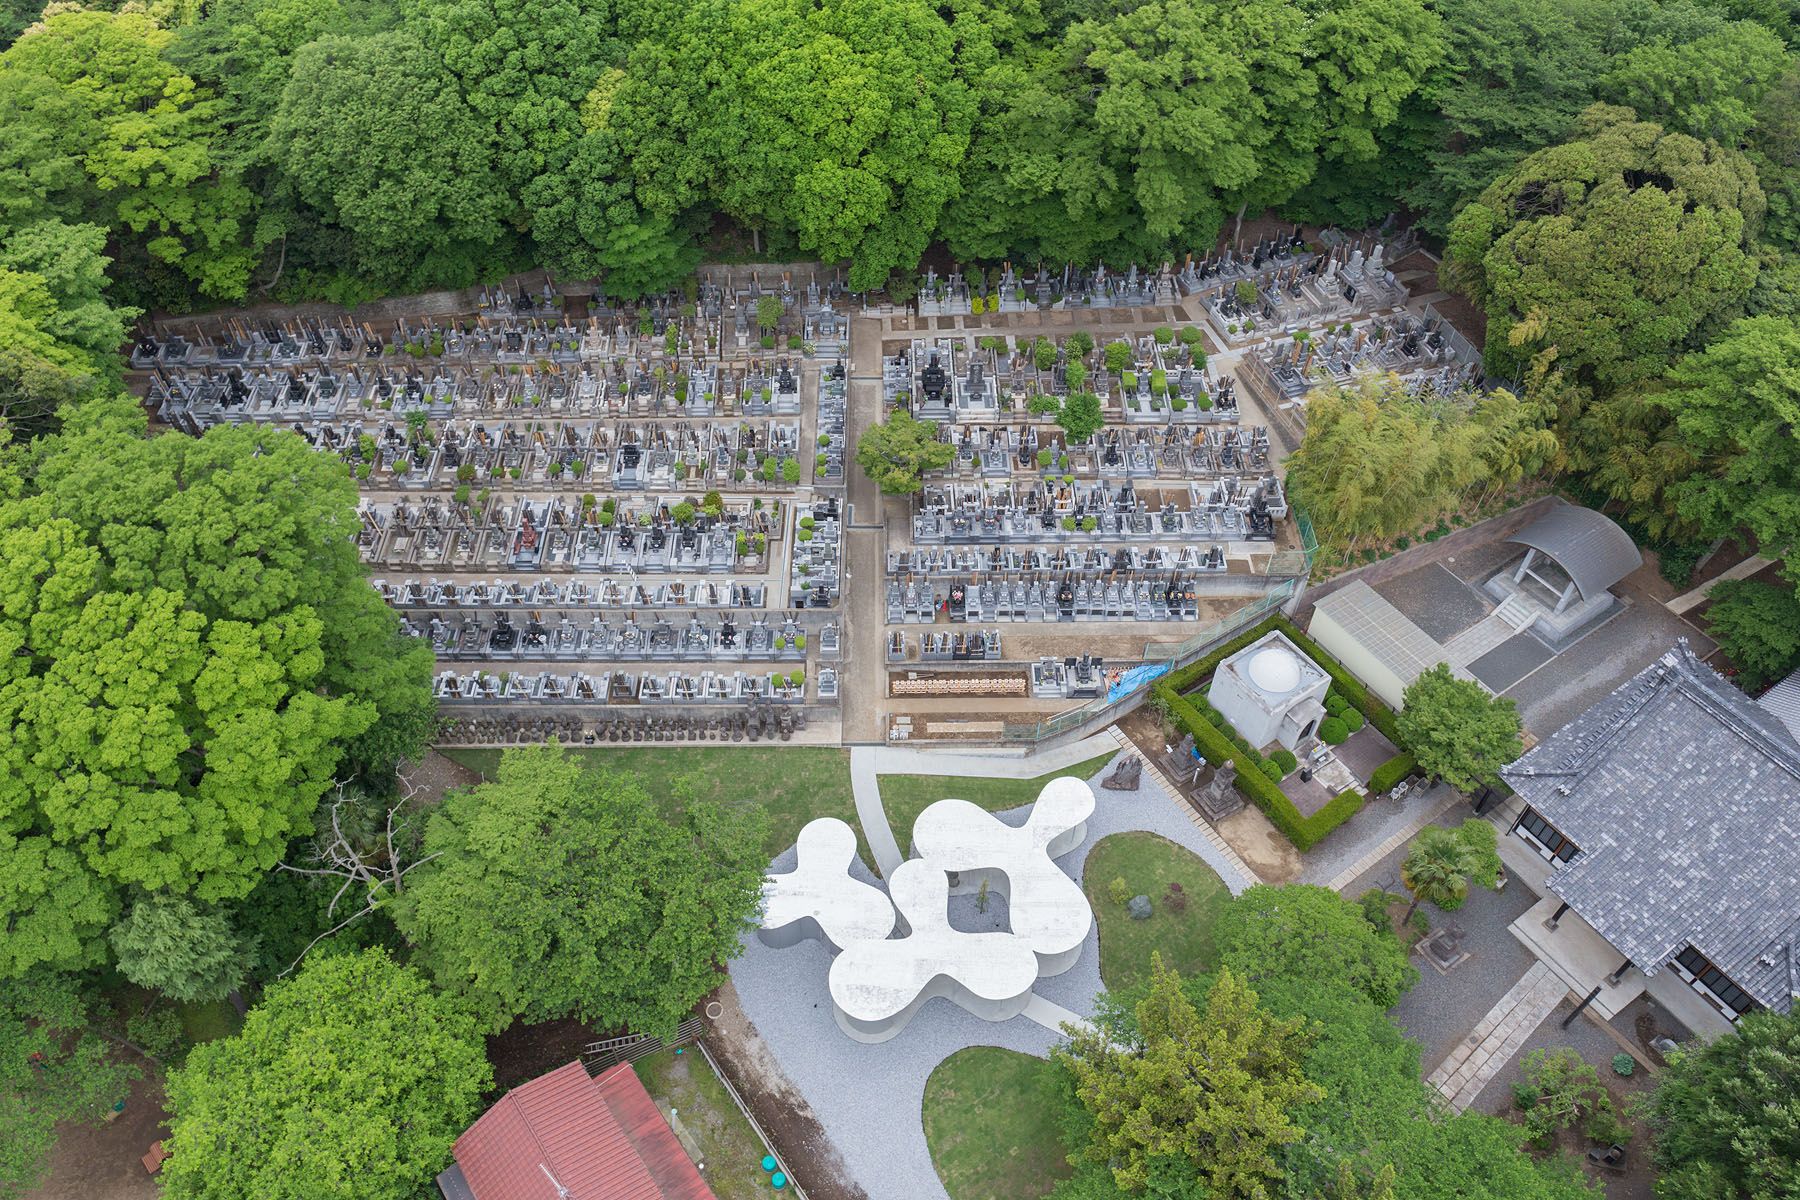 Sonei-ji Cemetery Pavilion – Sejima